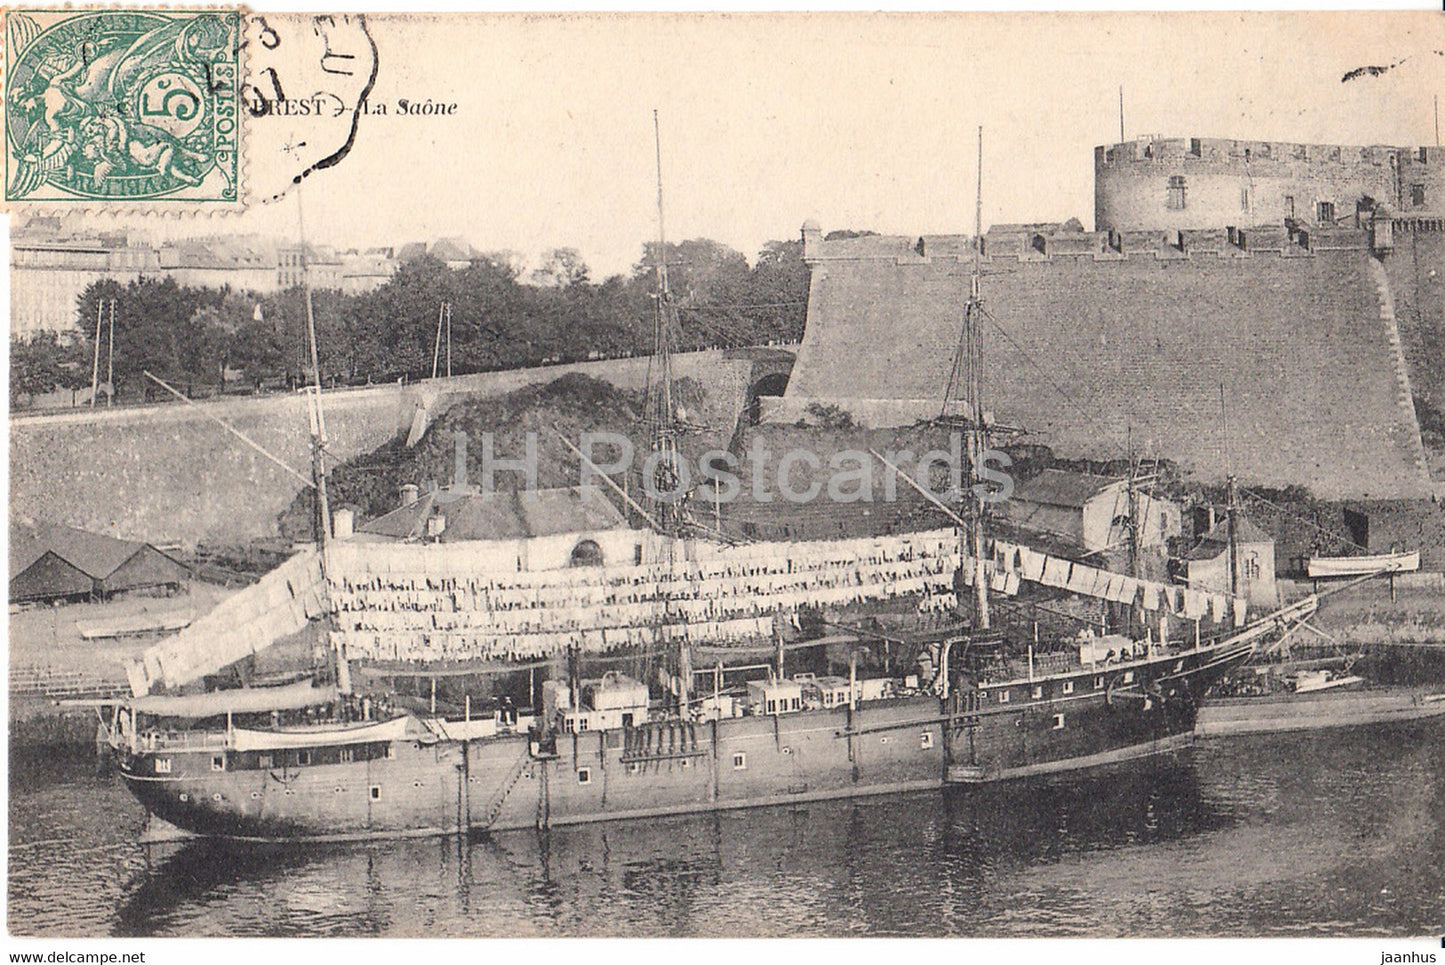 Brest - La Saone - ship - old postcard - 1907 - France - used - JH Postcards